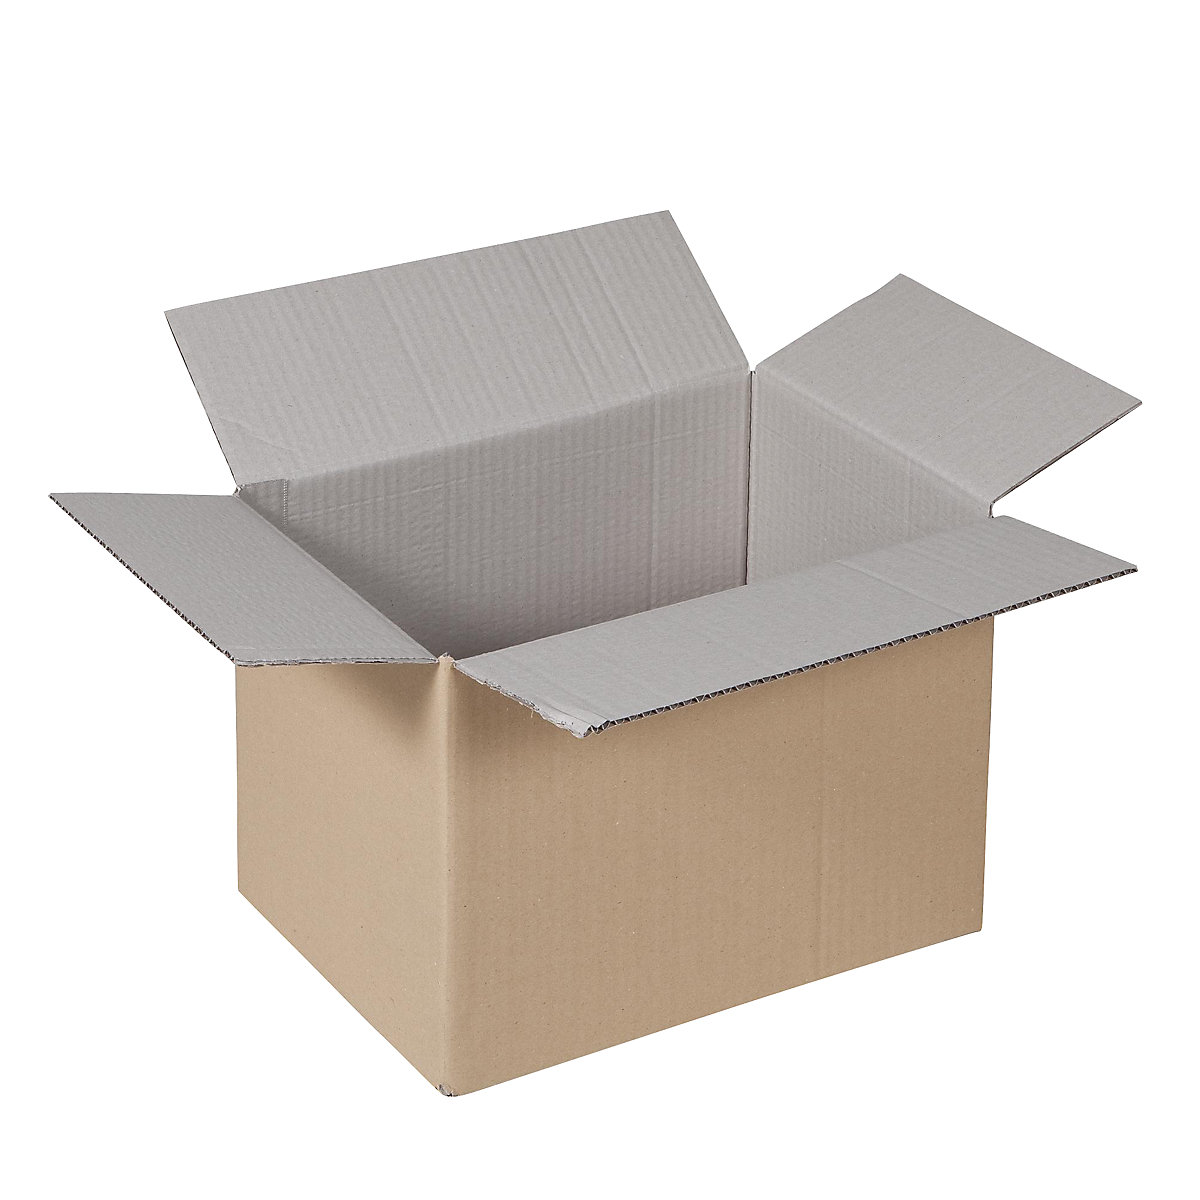 Folding cardboard box, FEFCO 0201, made of single fluted cardboard, internal dimensions 320 x 250 x 200 mm, pack of 50-16